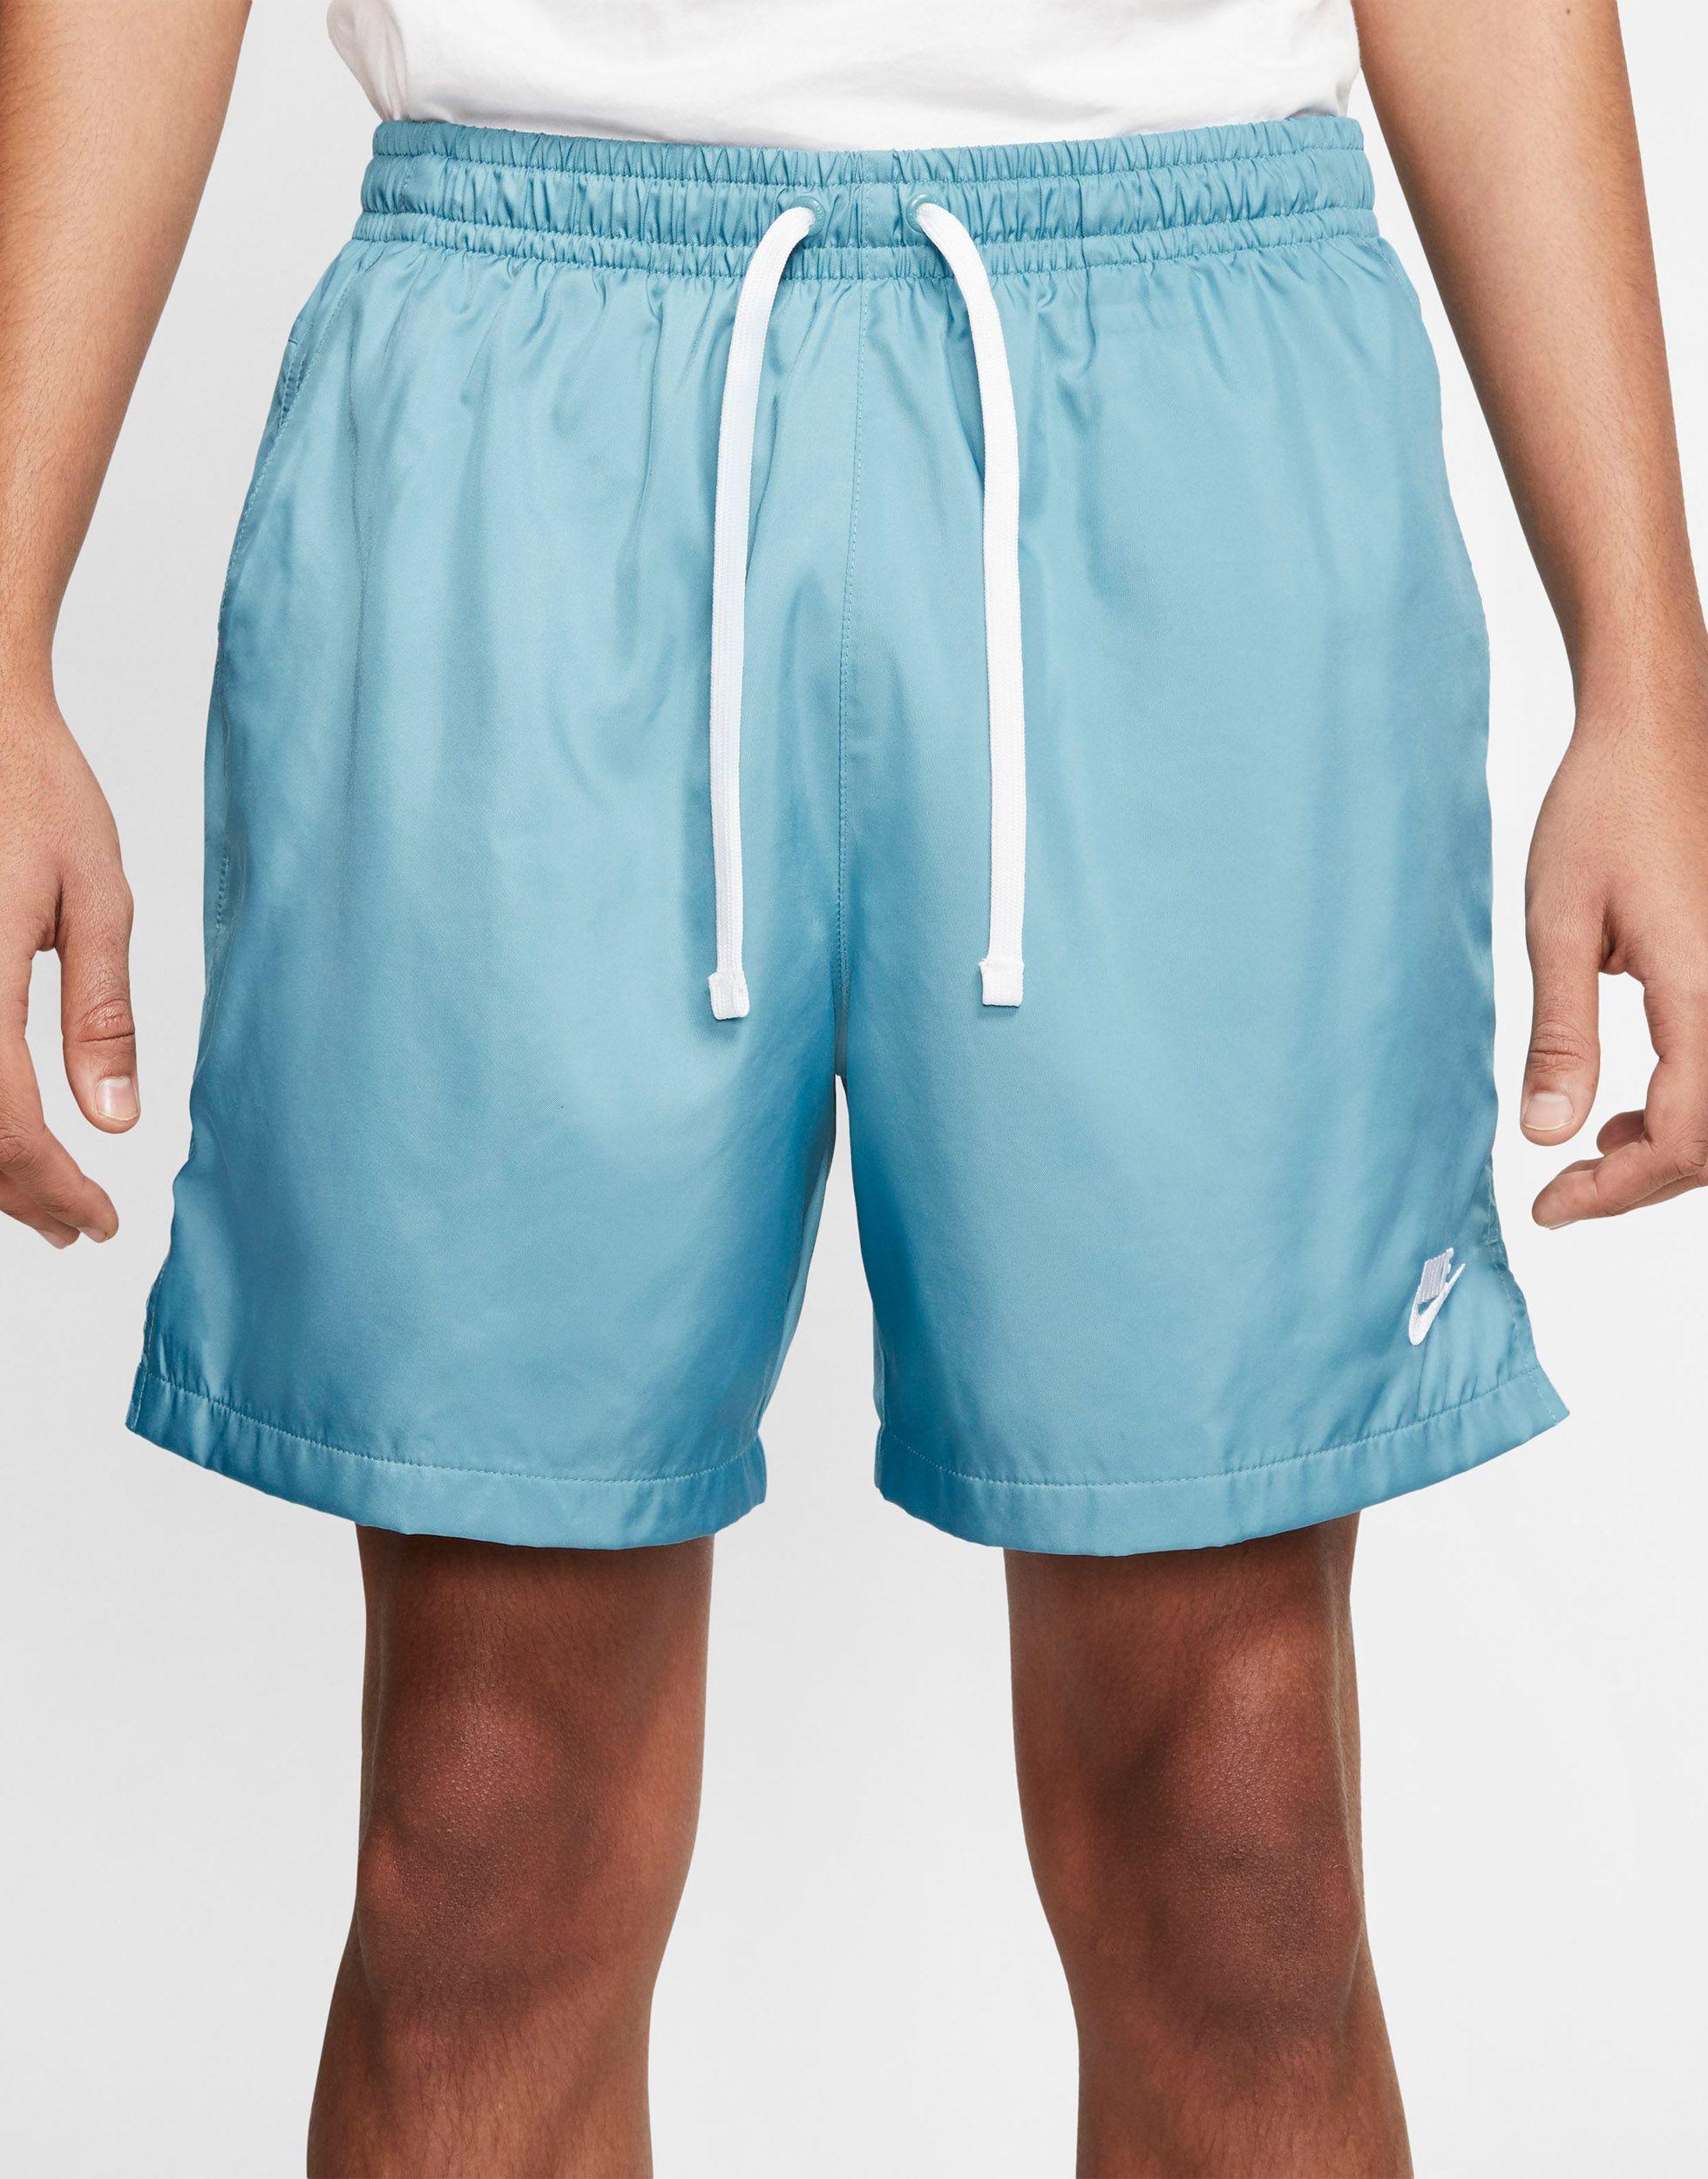 Nike Woven Logo Shorts in Blue for Men - Lyst